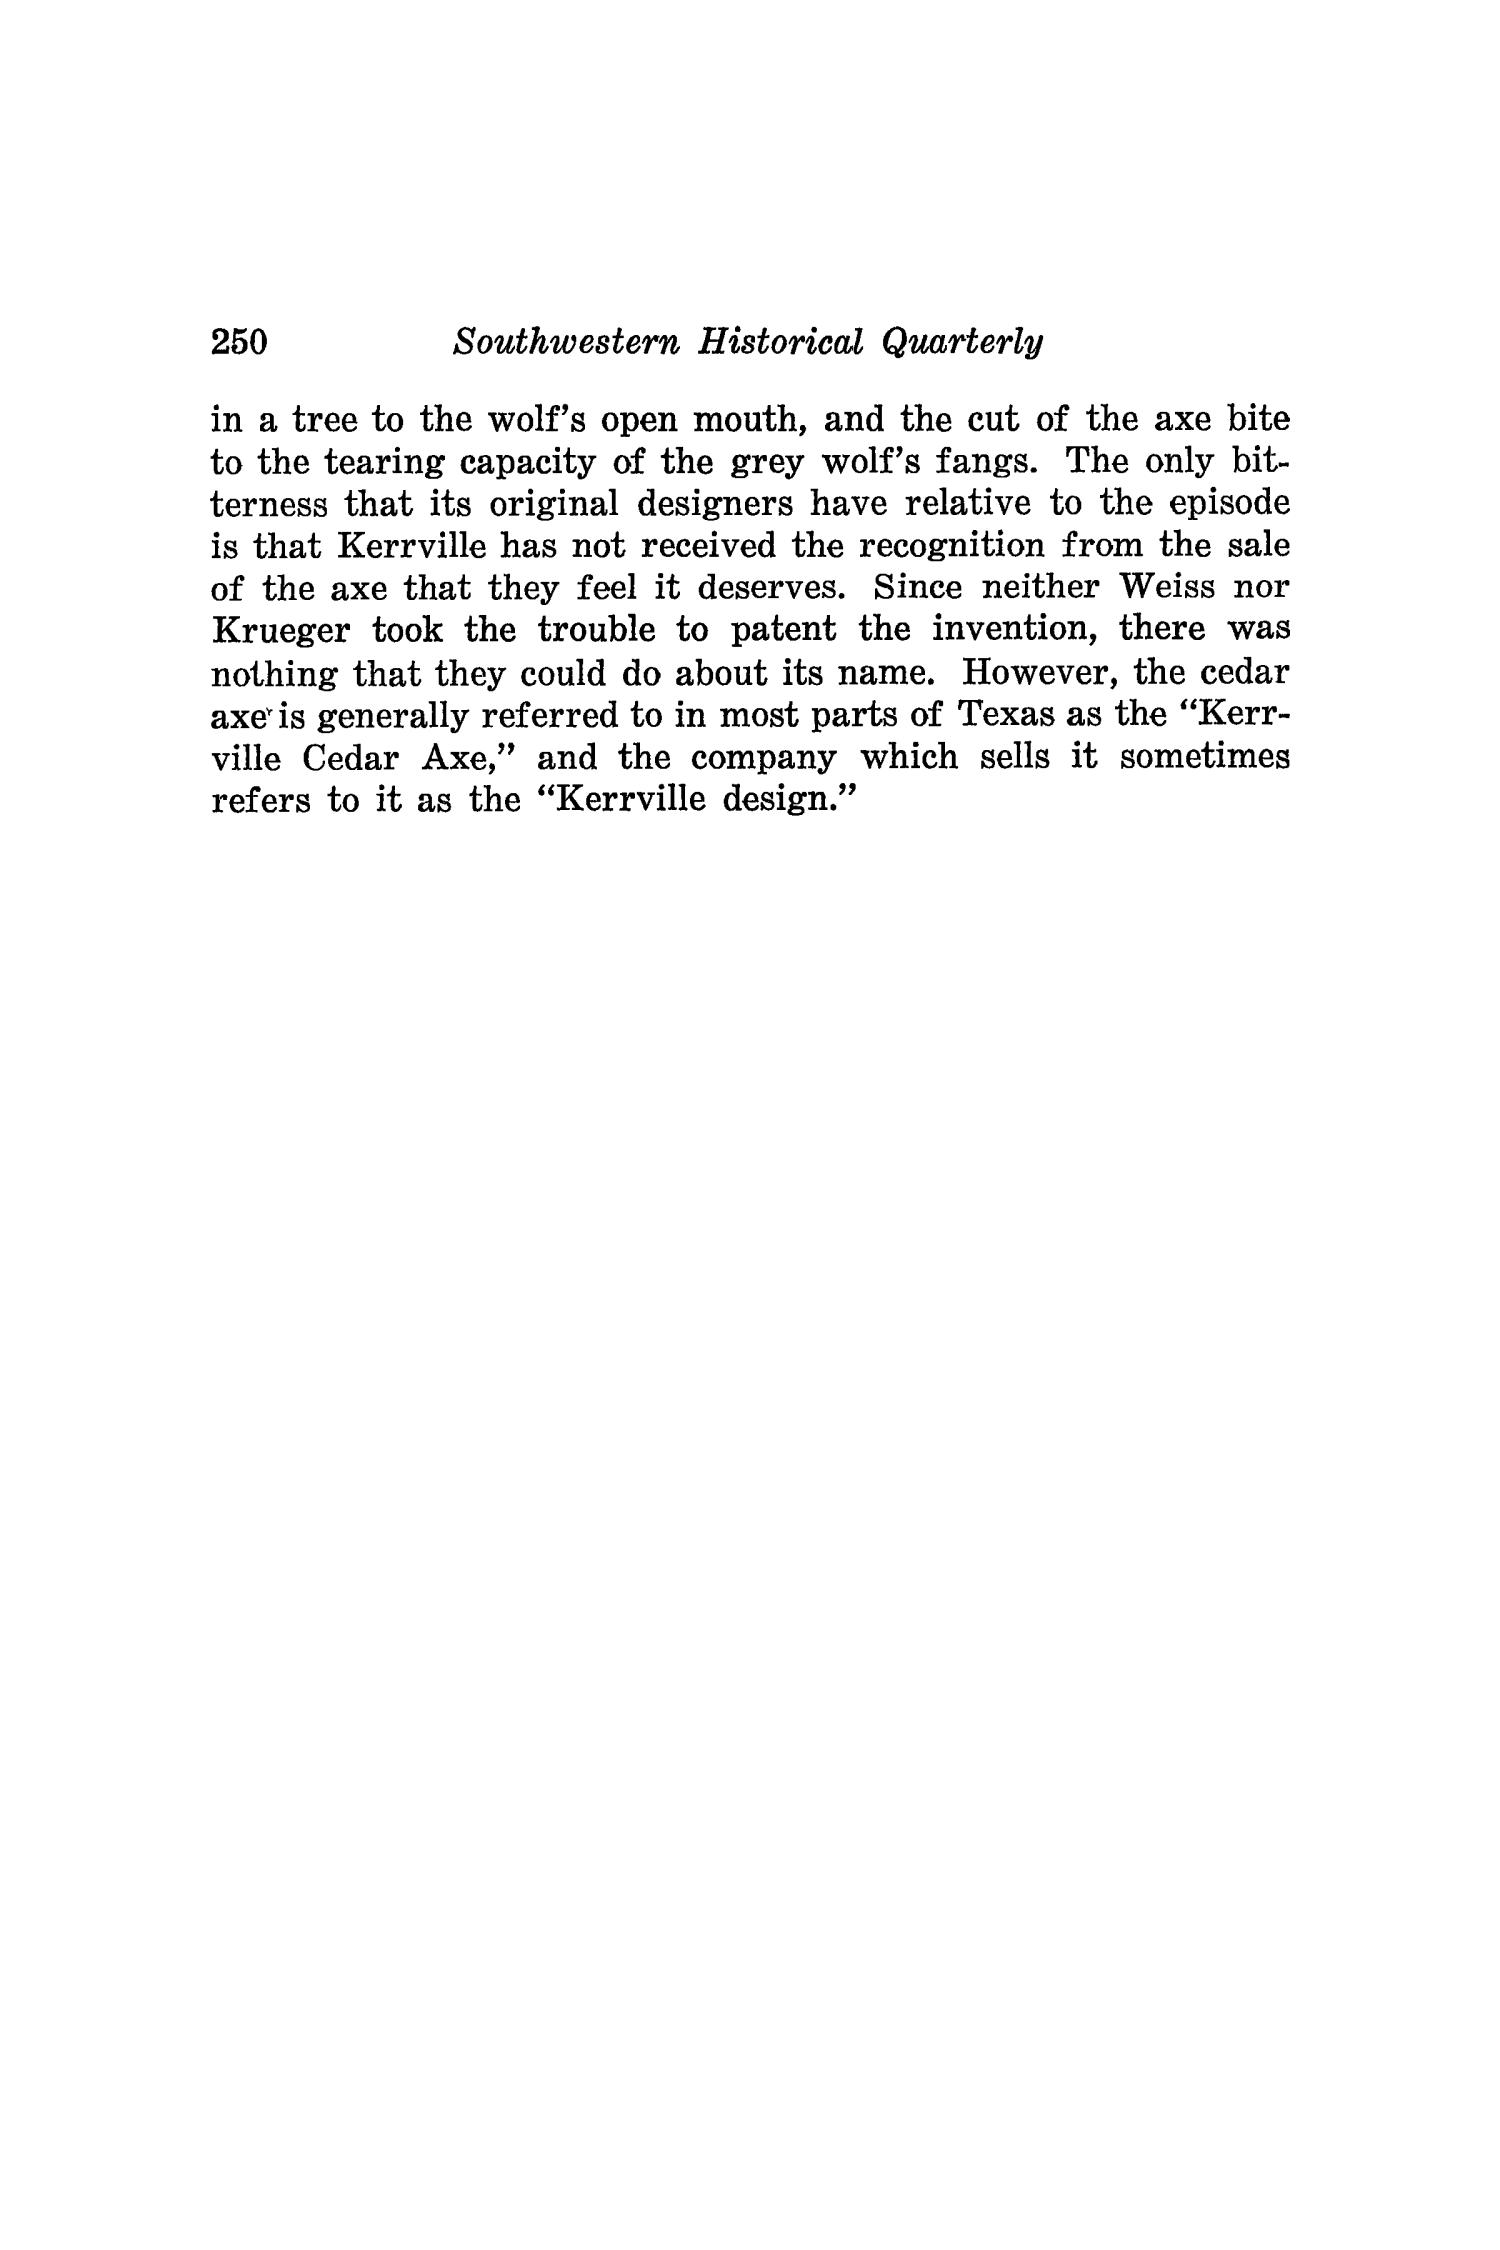 The Southwestern Historical Quarterly, Volume 50, July 1946 - April, 1947
                                                
                                                    250
                                                